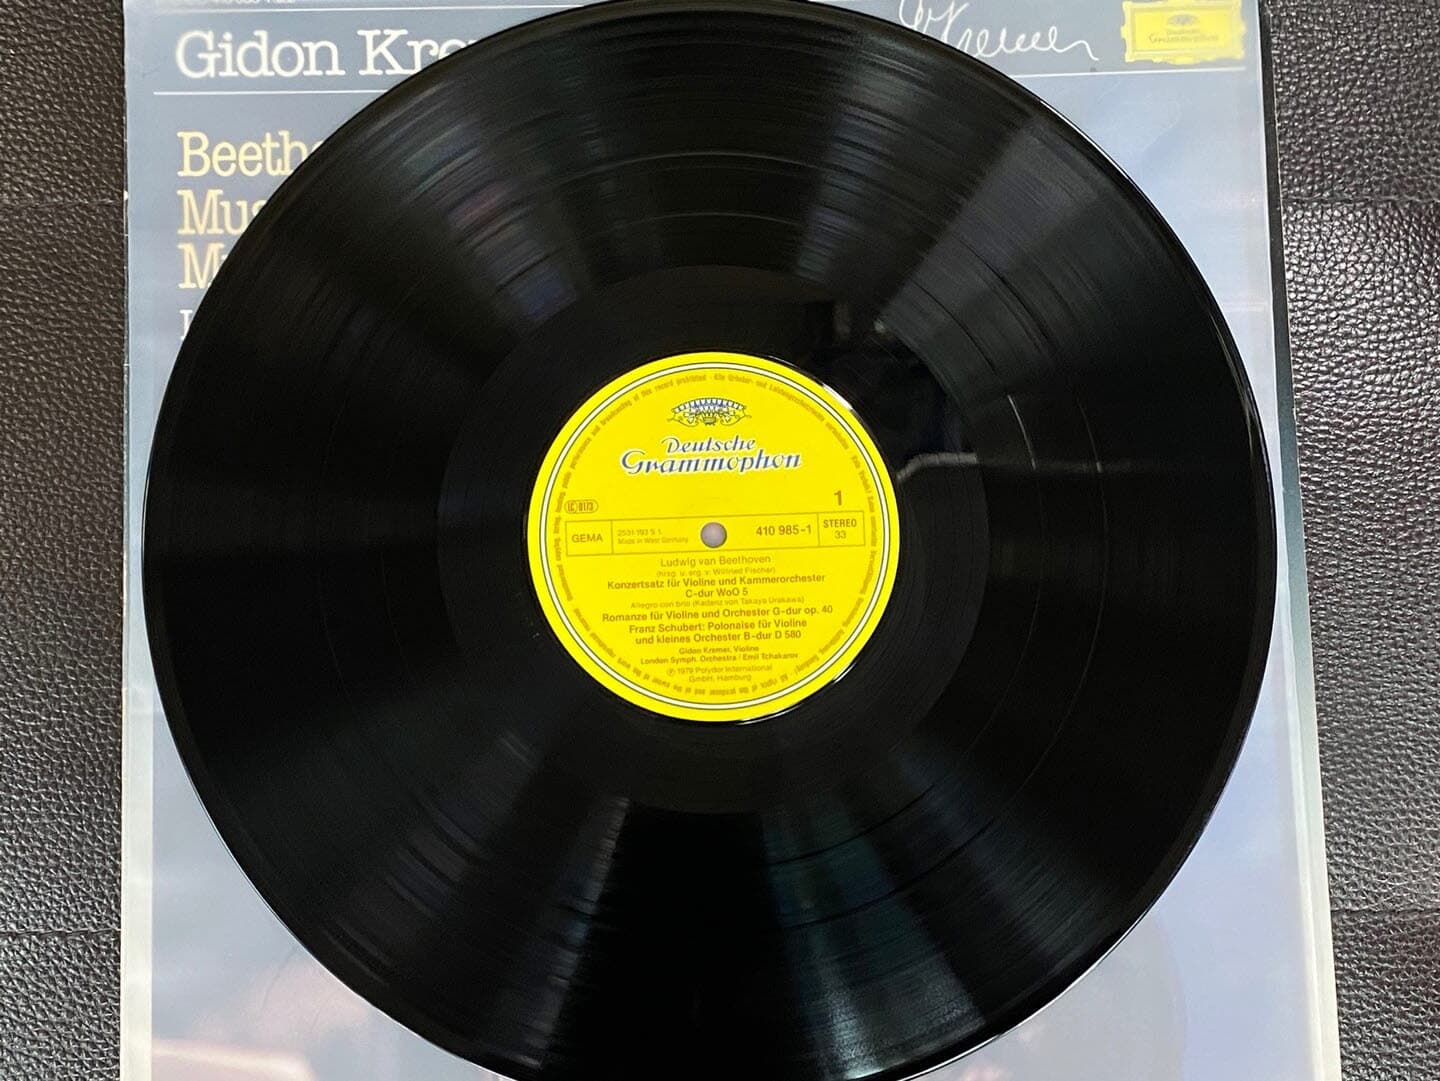 [LP] 기돈 크레머 - Gidon Kremer - Beethoven,Schubert Musik Fur Violine & Orchester LP [독일반]